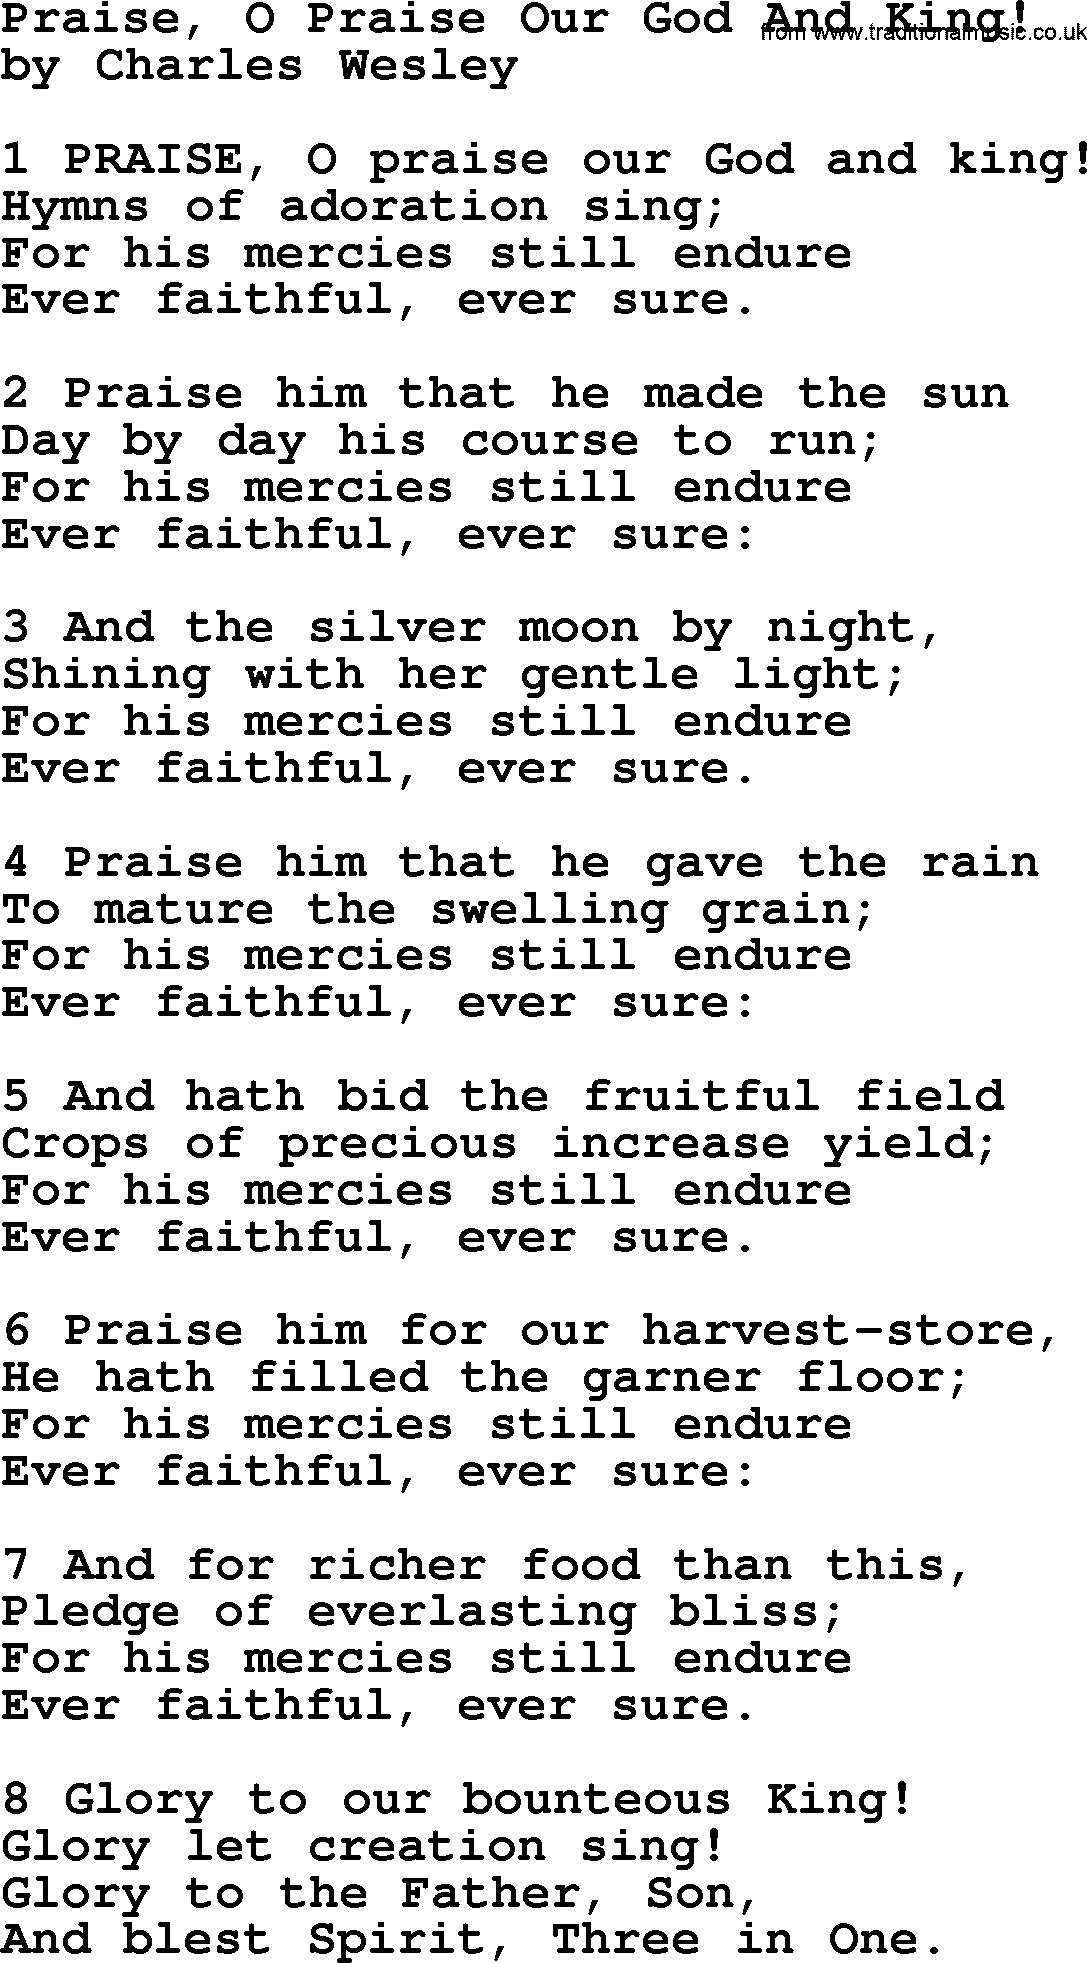 Charles Wesley hymn: Praise, O Praise Our God And King!, lyrics